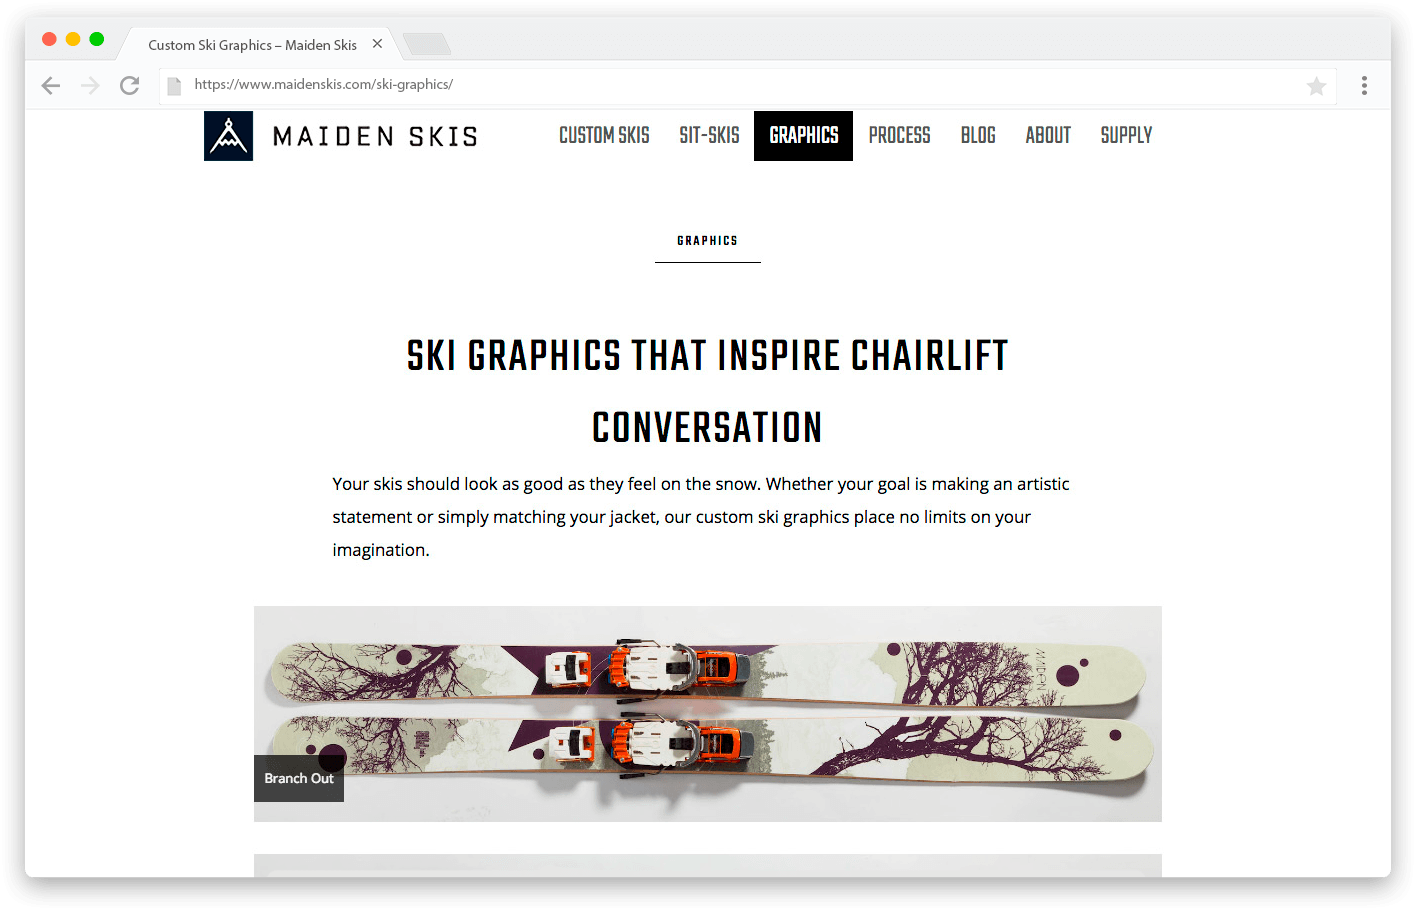 Maiden Skis website screenshot